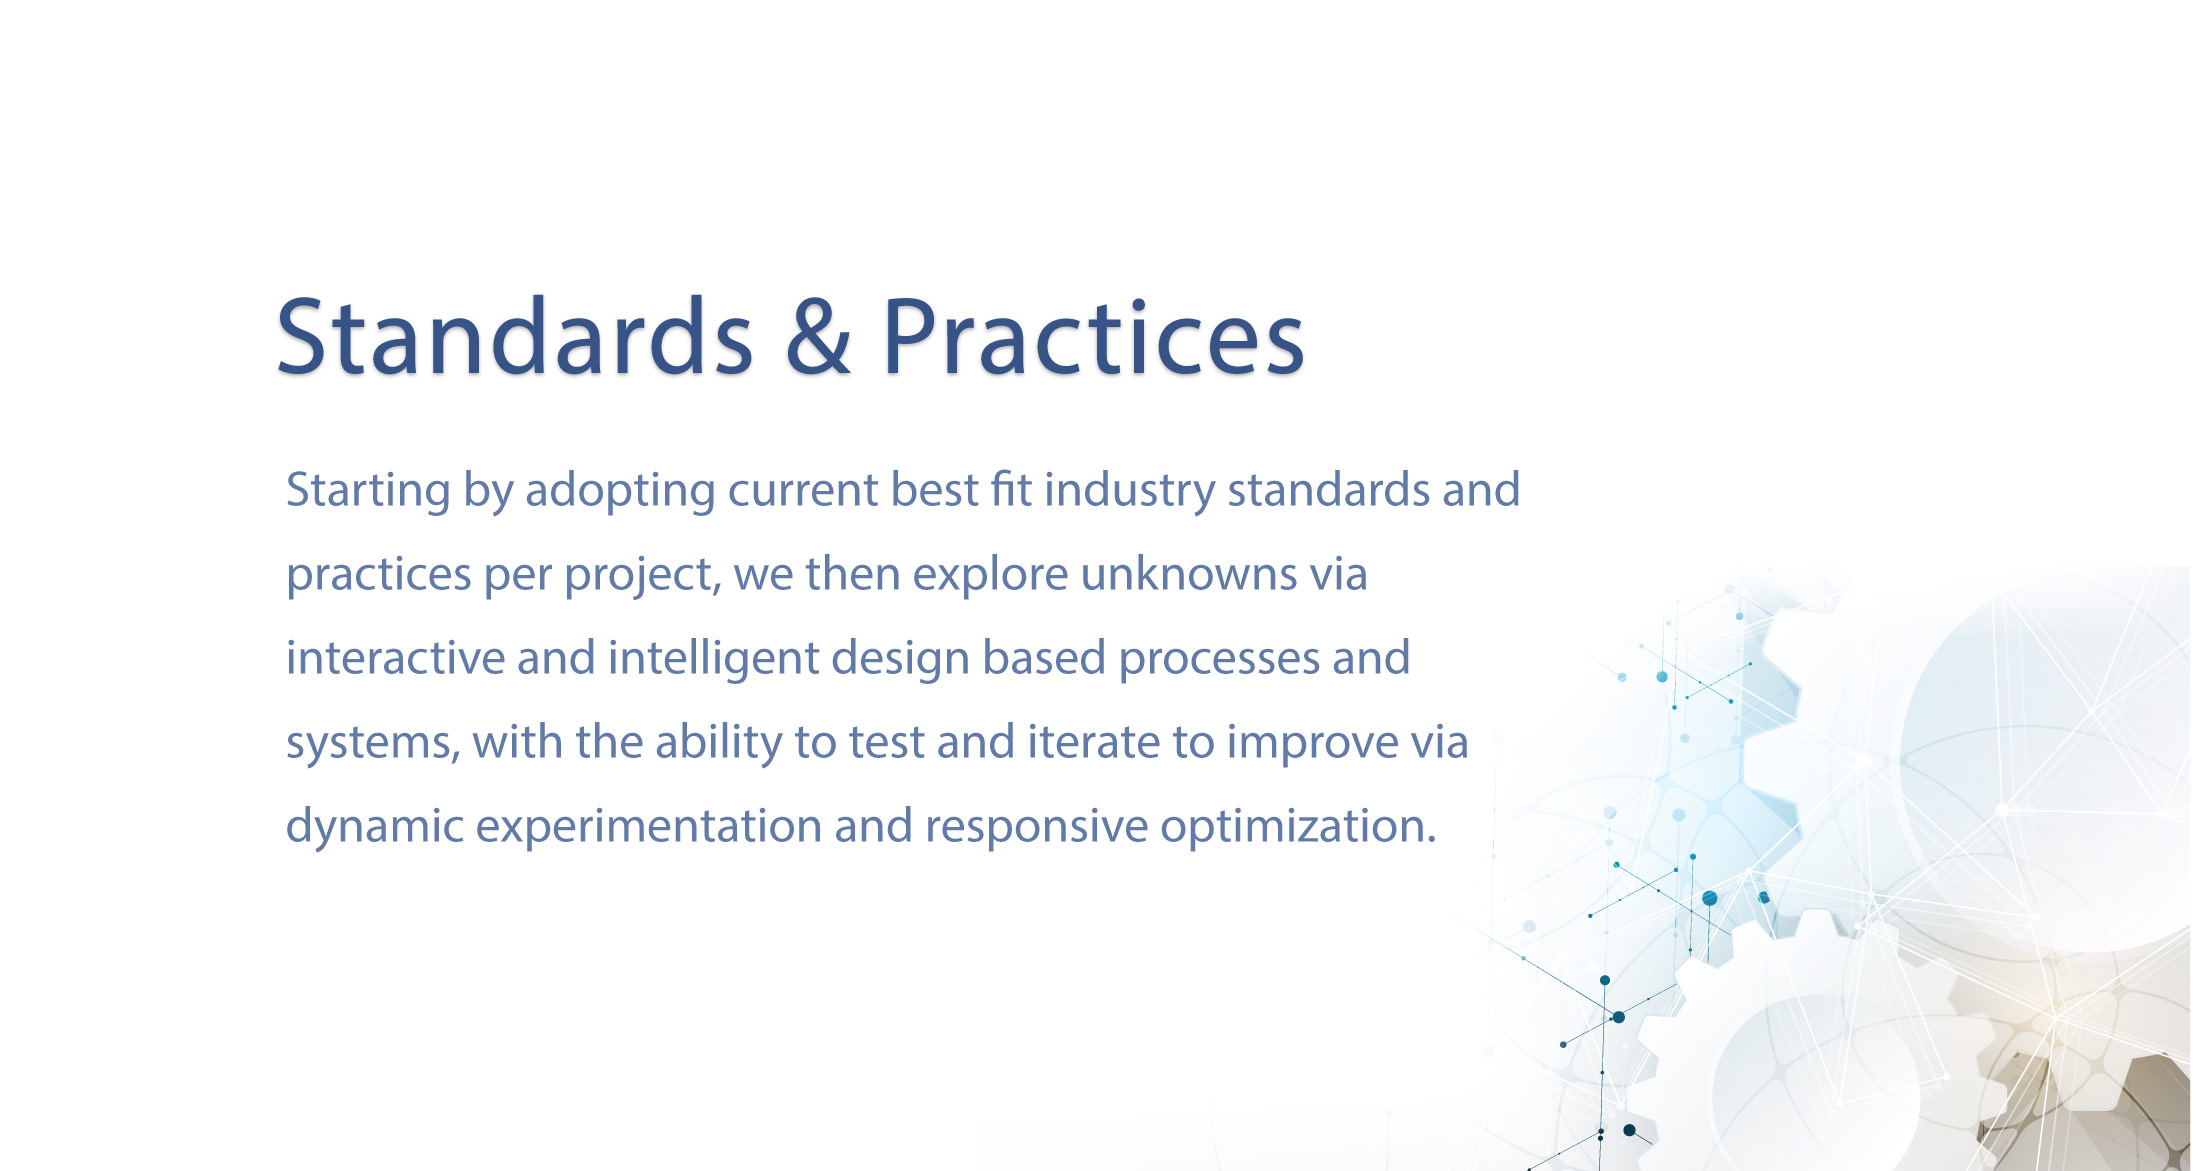 Standards & Practices